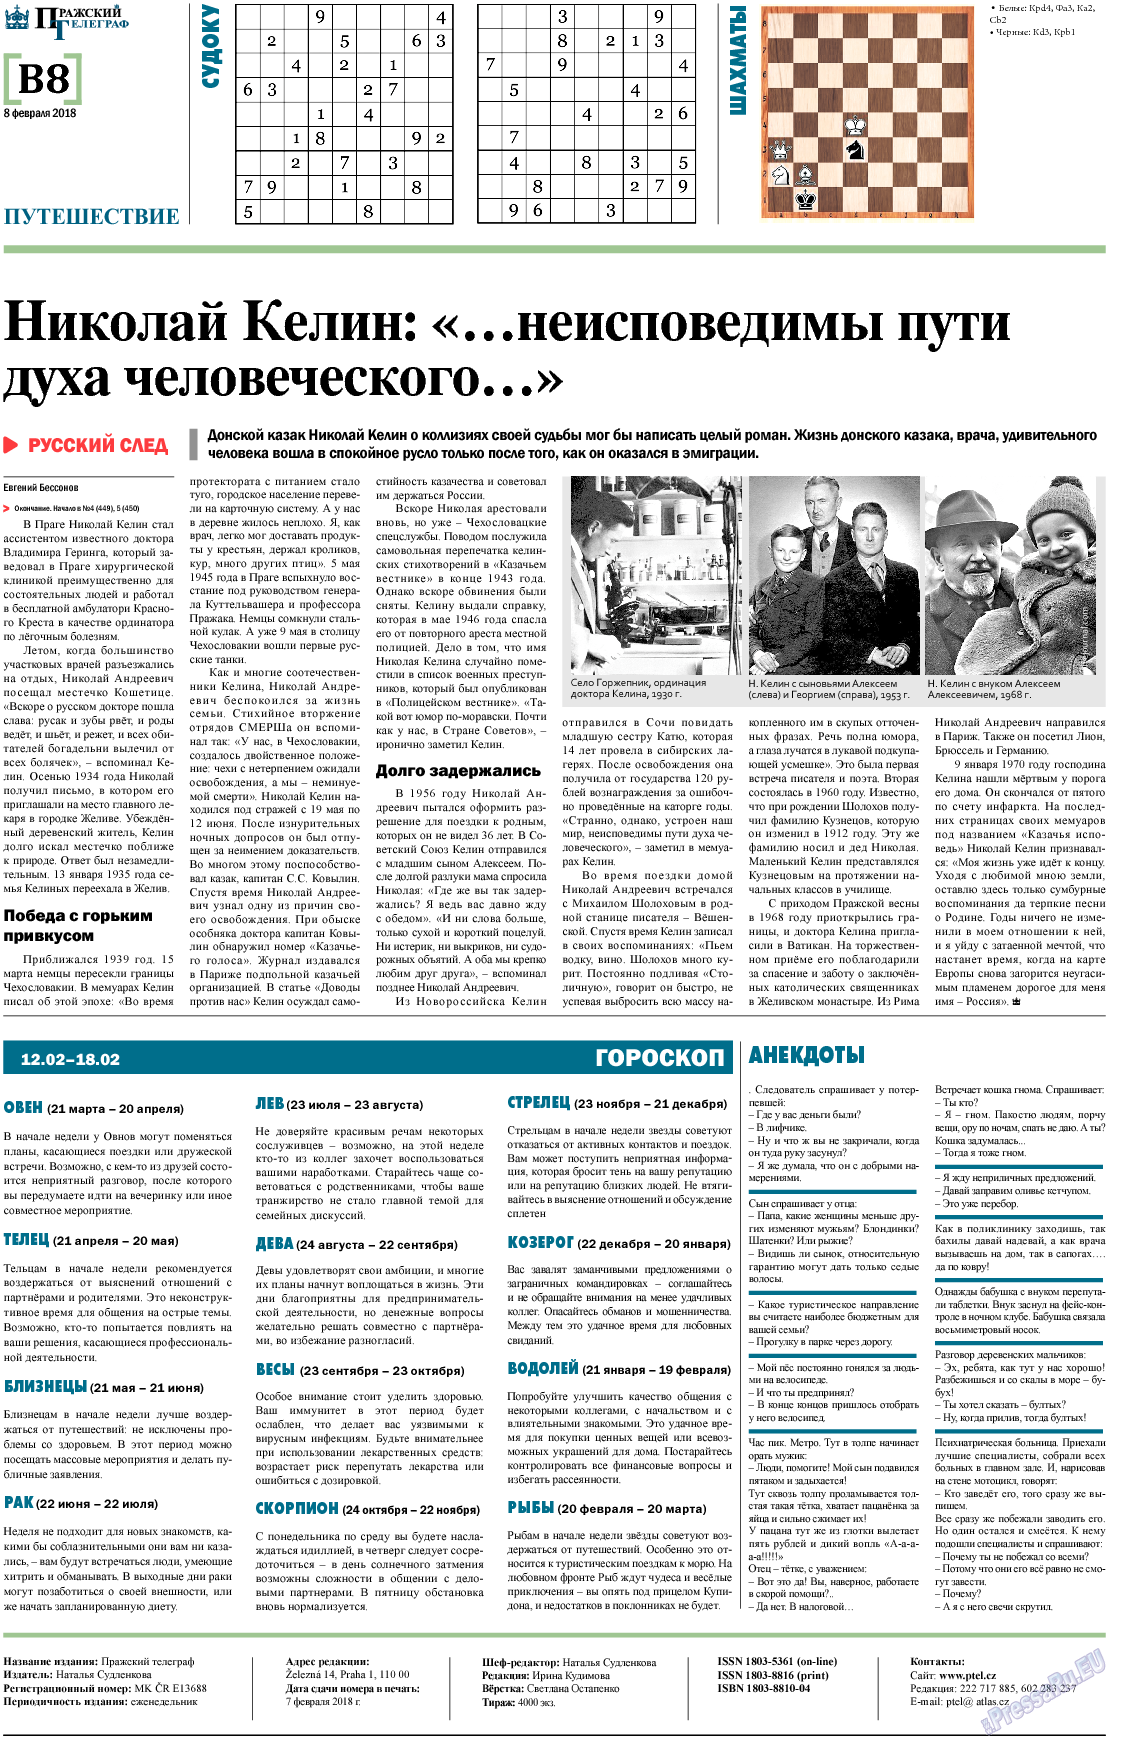 Пражский телеграф, газета. 2018 №6 стр.16